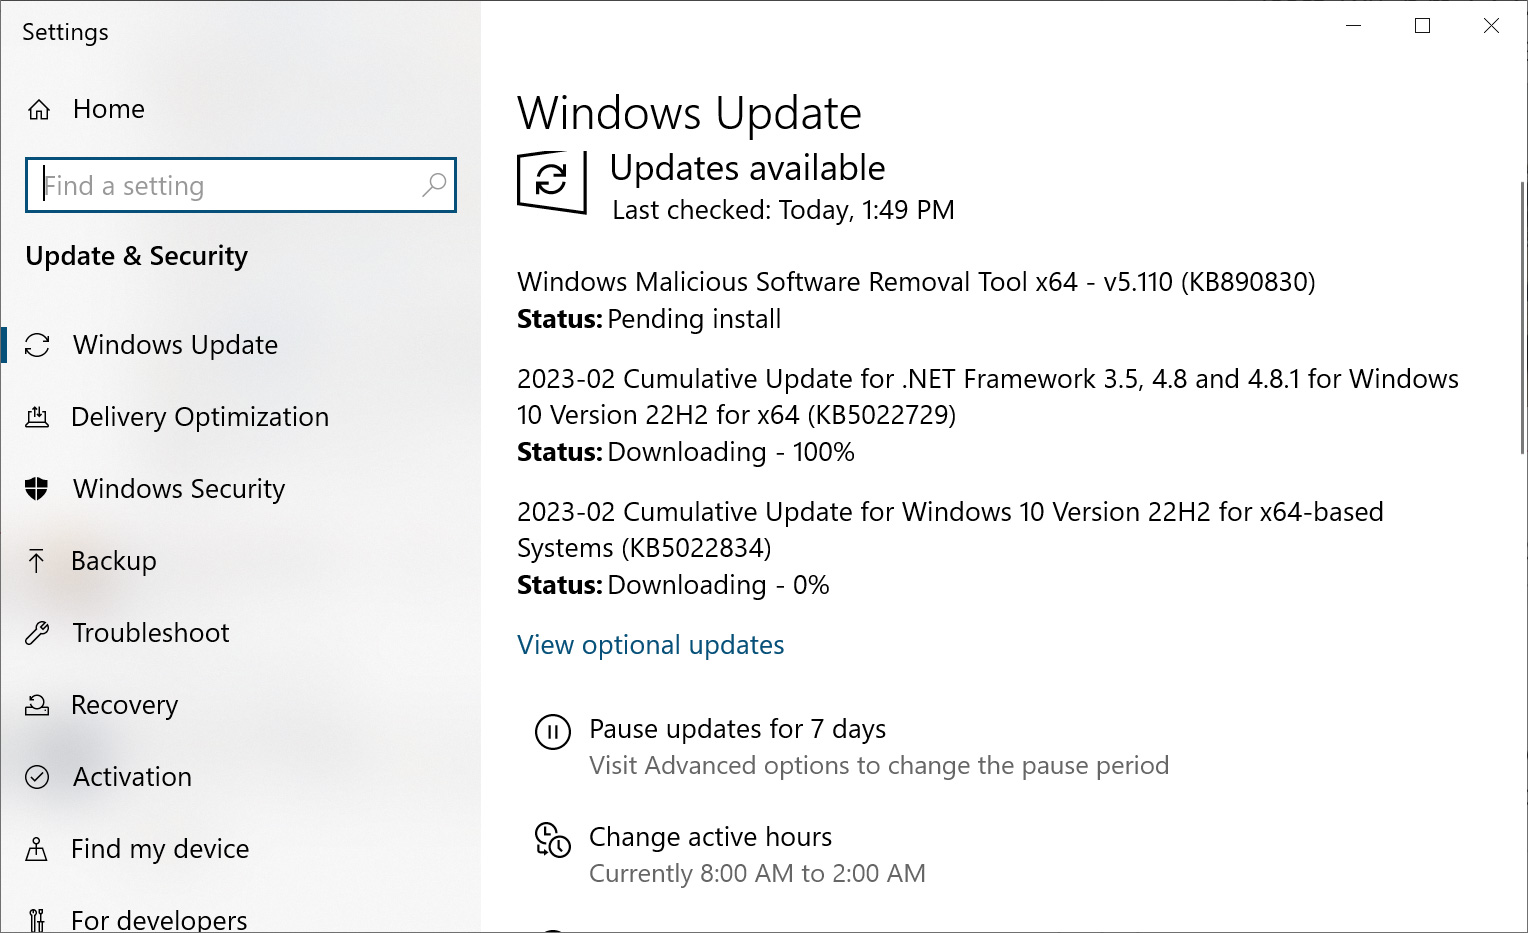 Windows Update installing the KB5022834 update